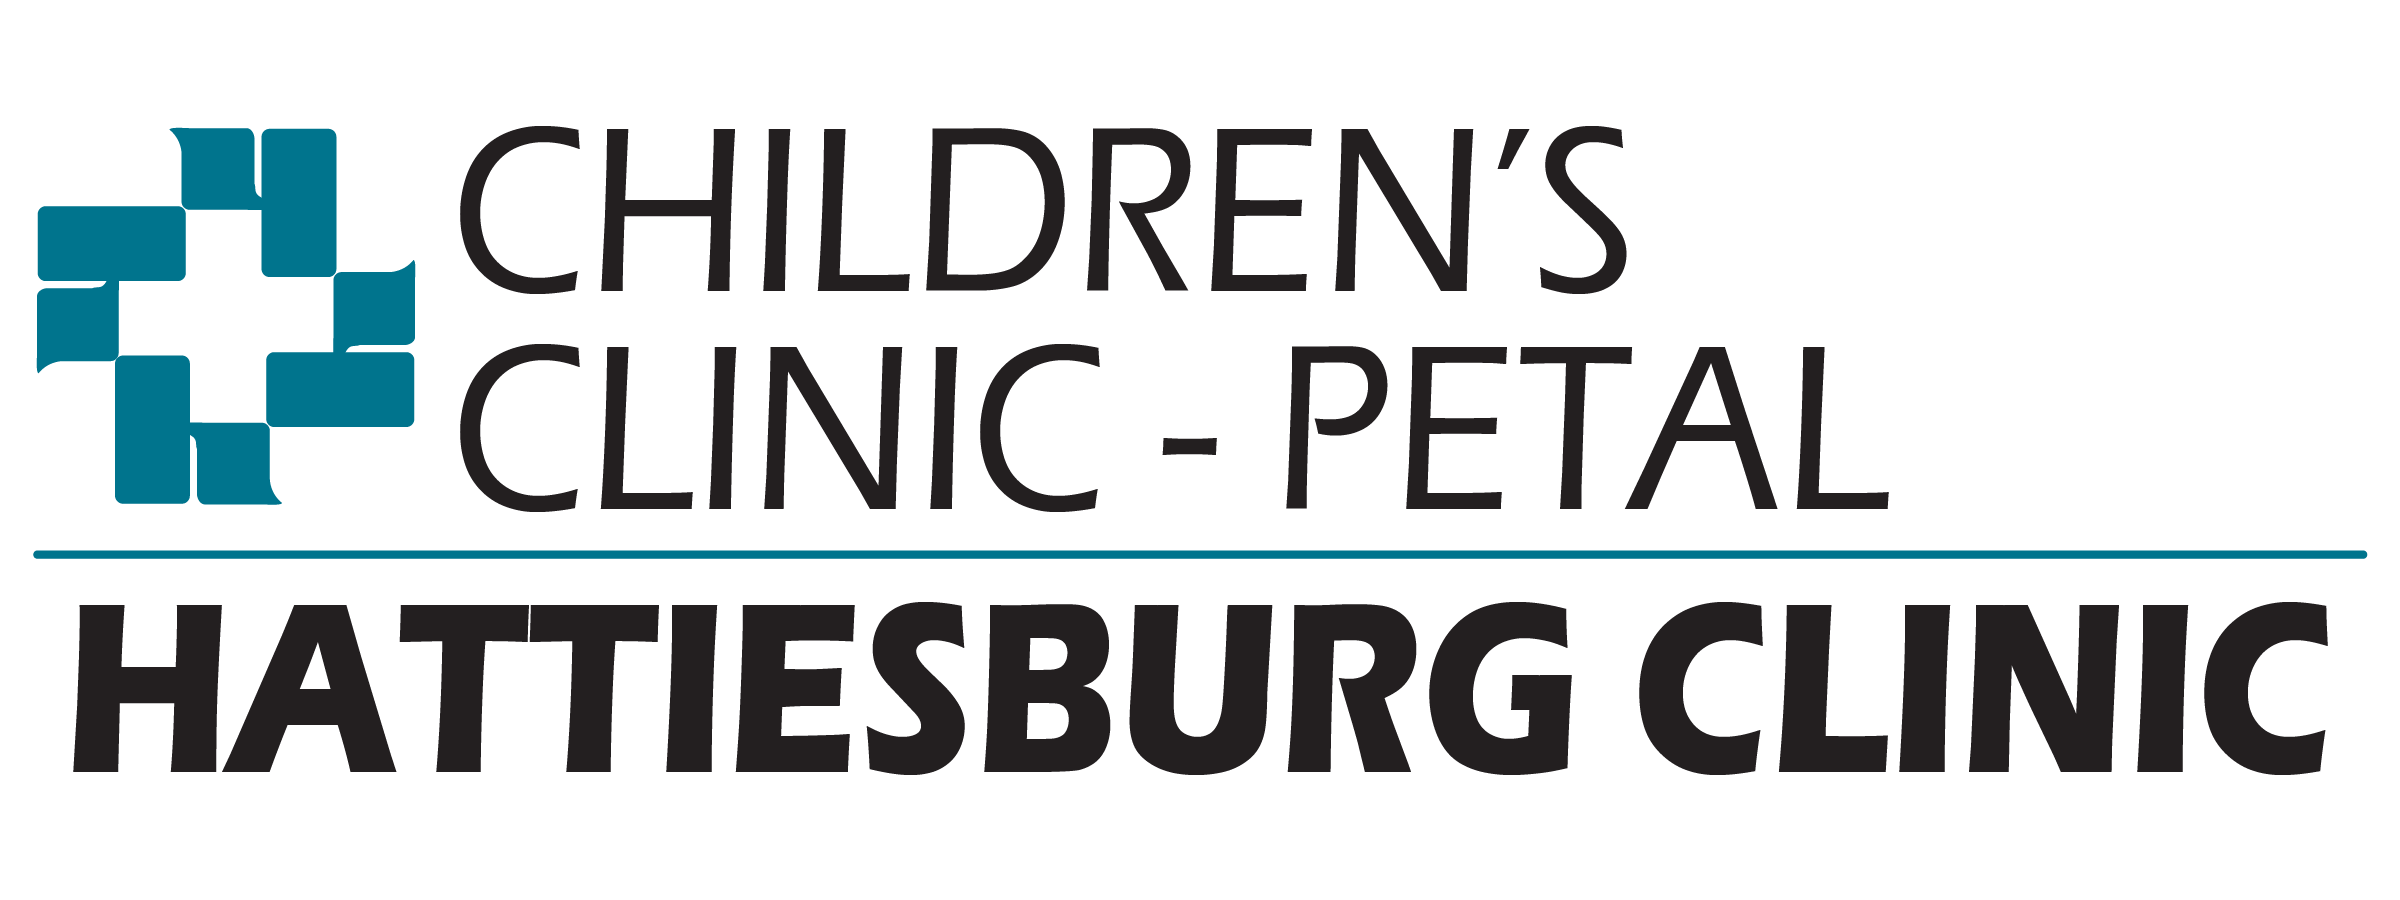 Children's Clinic - Petal logo